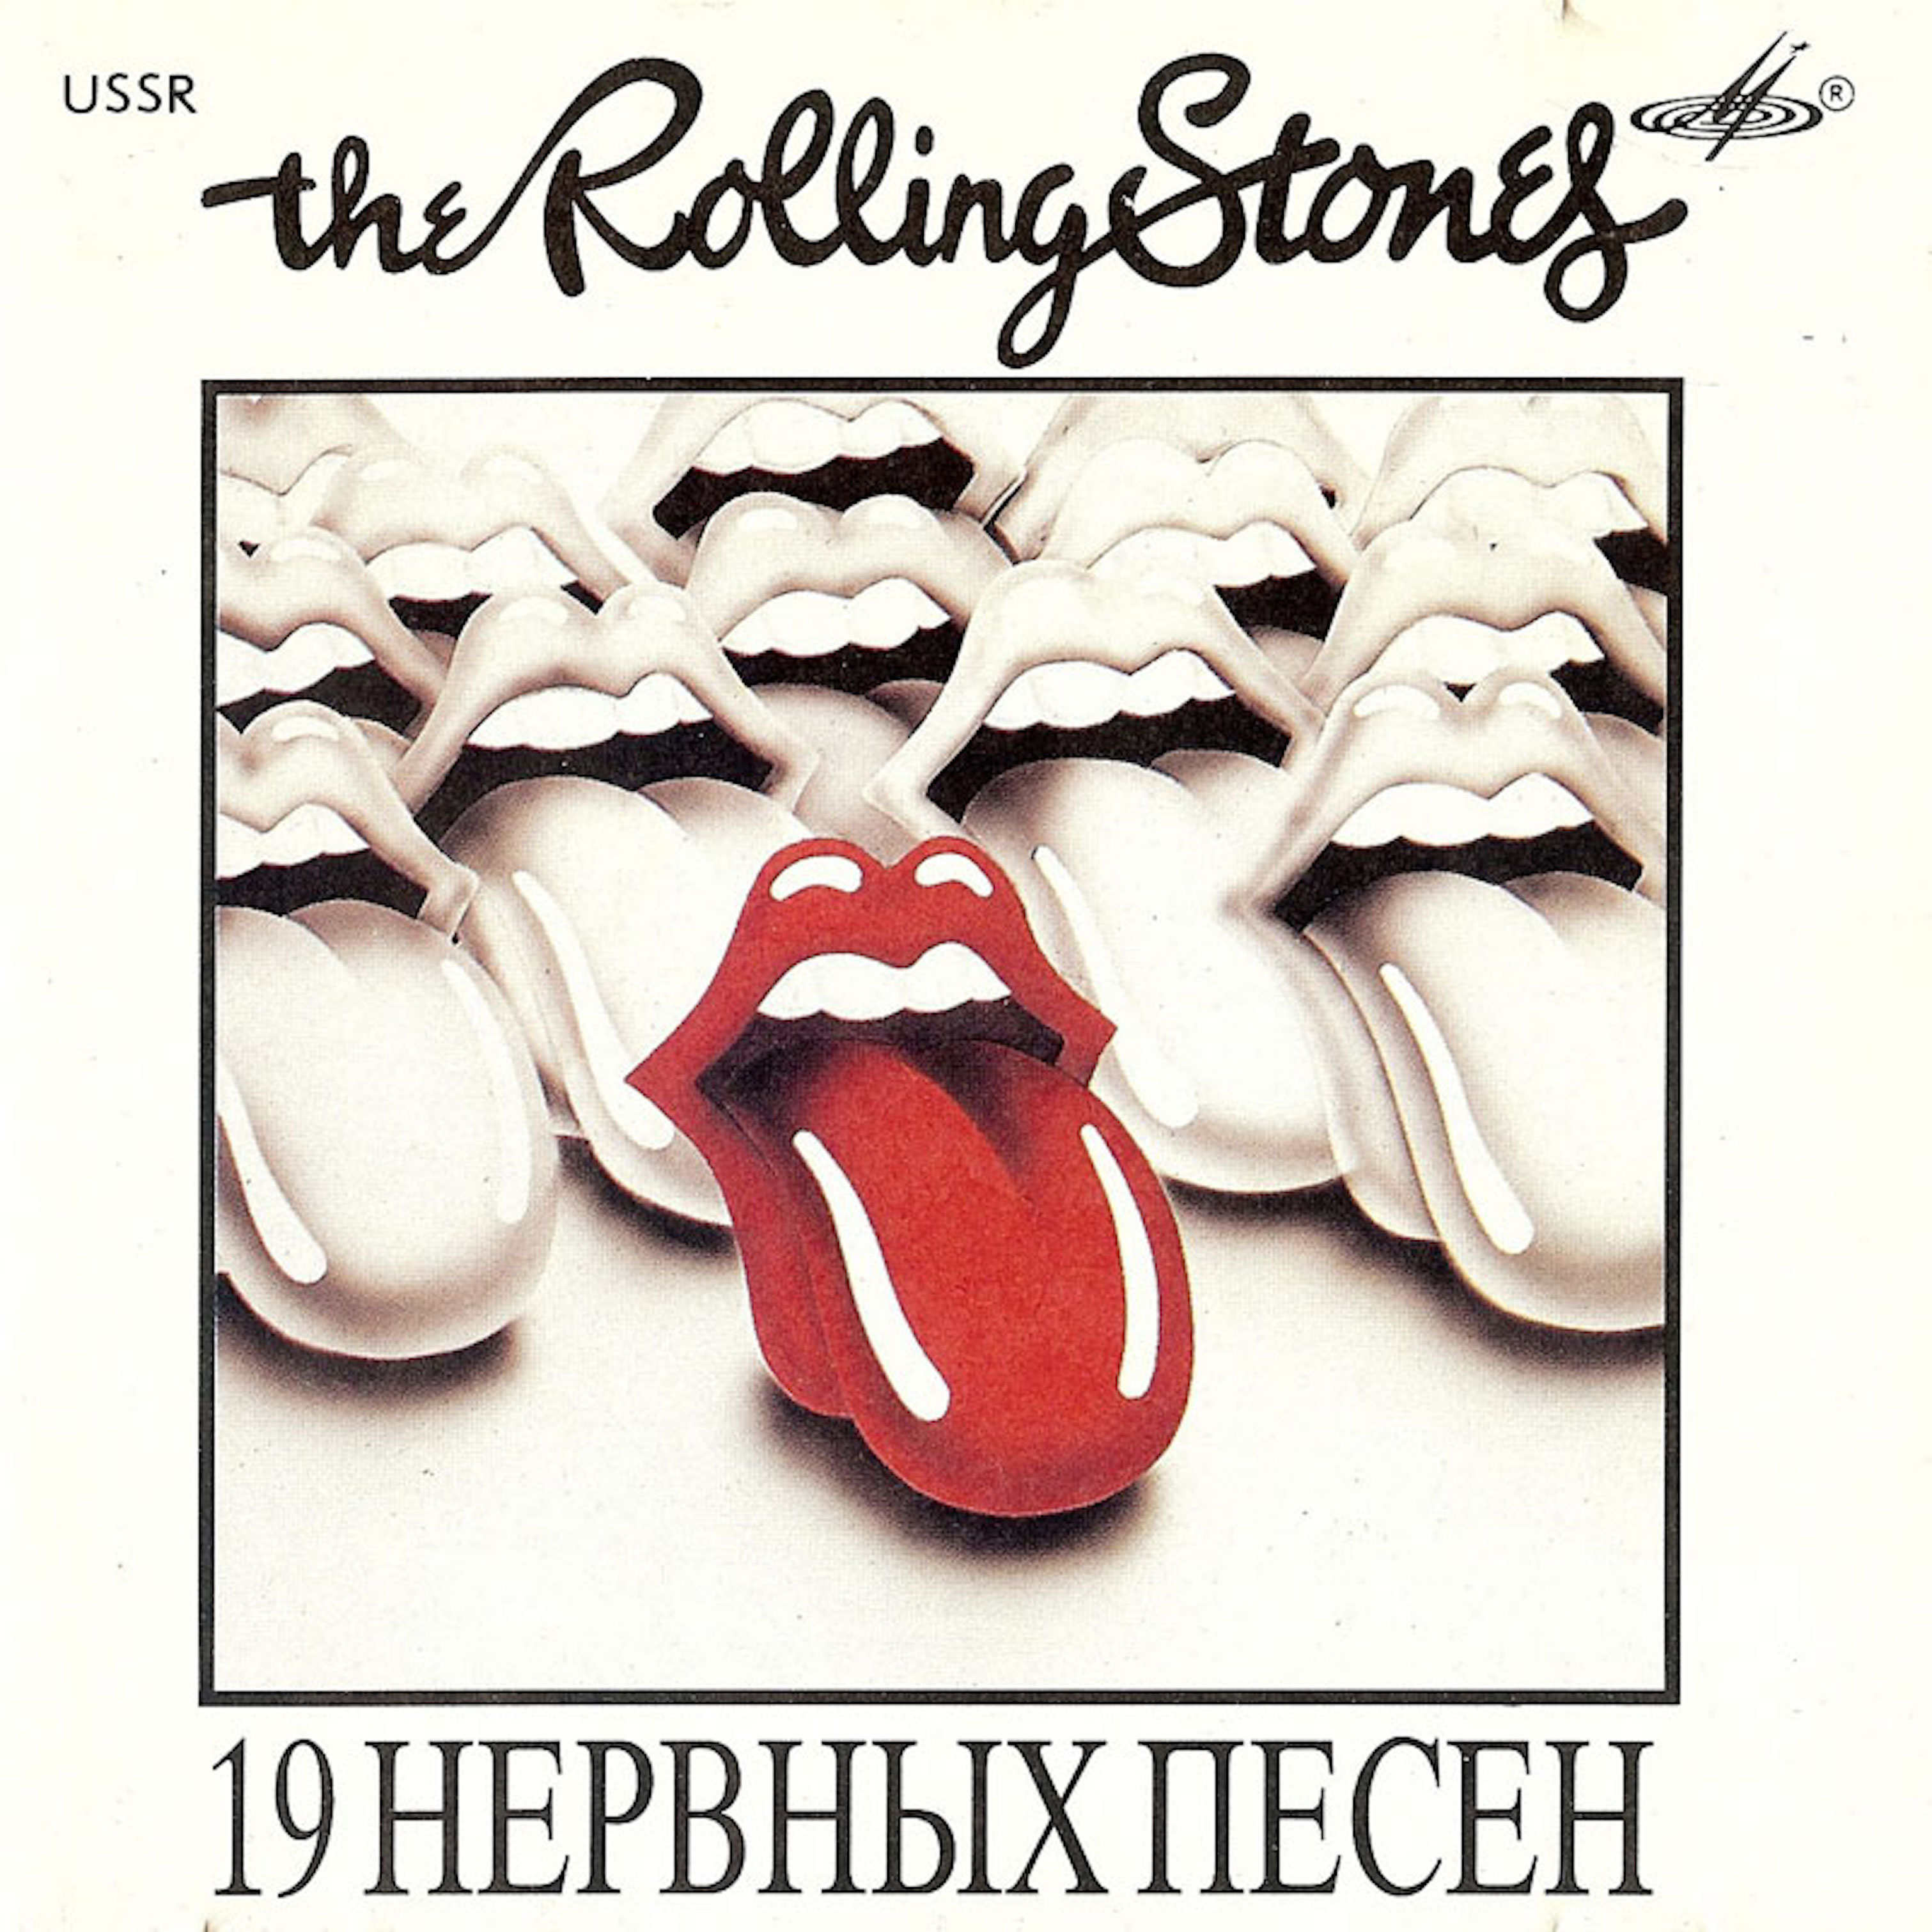 Rolling stones song stoned. Rolling Stones обложки альбомов. Обложки дисков Роллинг стоунз. Названия альбомов Роллинг, стоунз. The Rolling Stones сборник обложка.